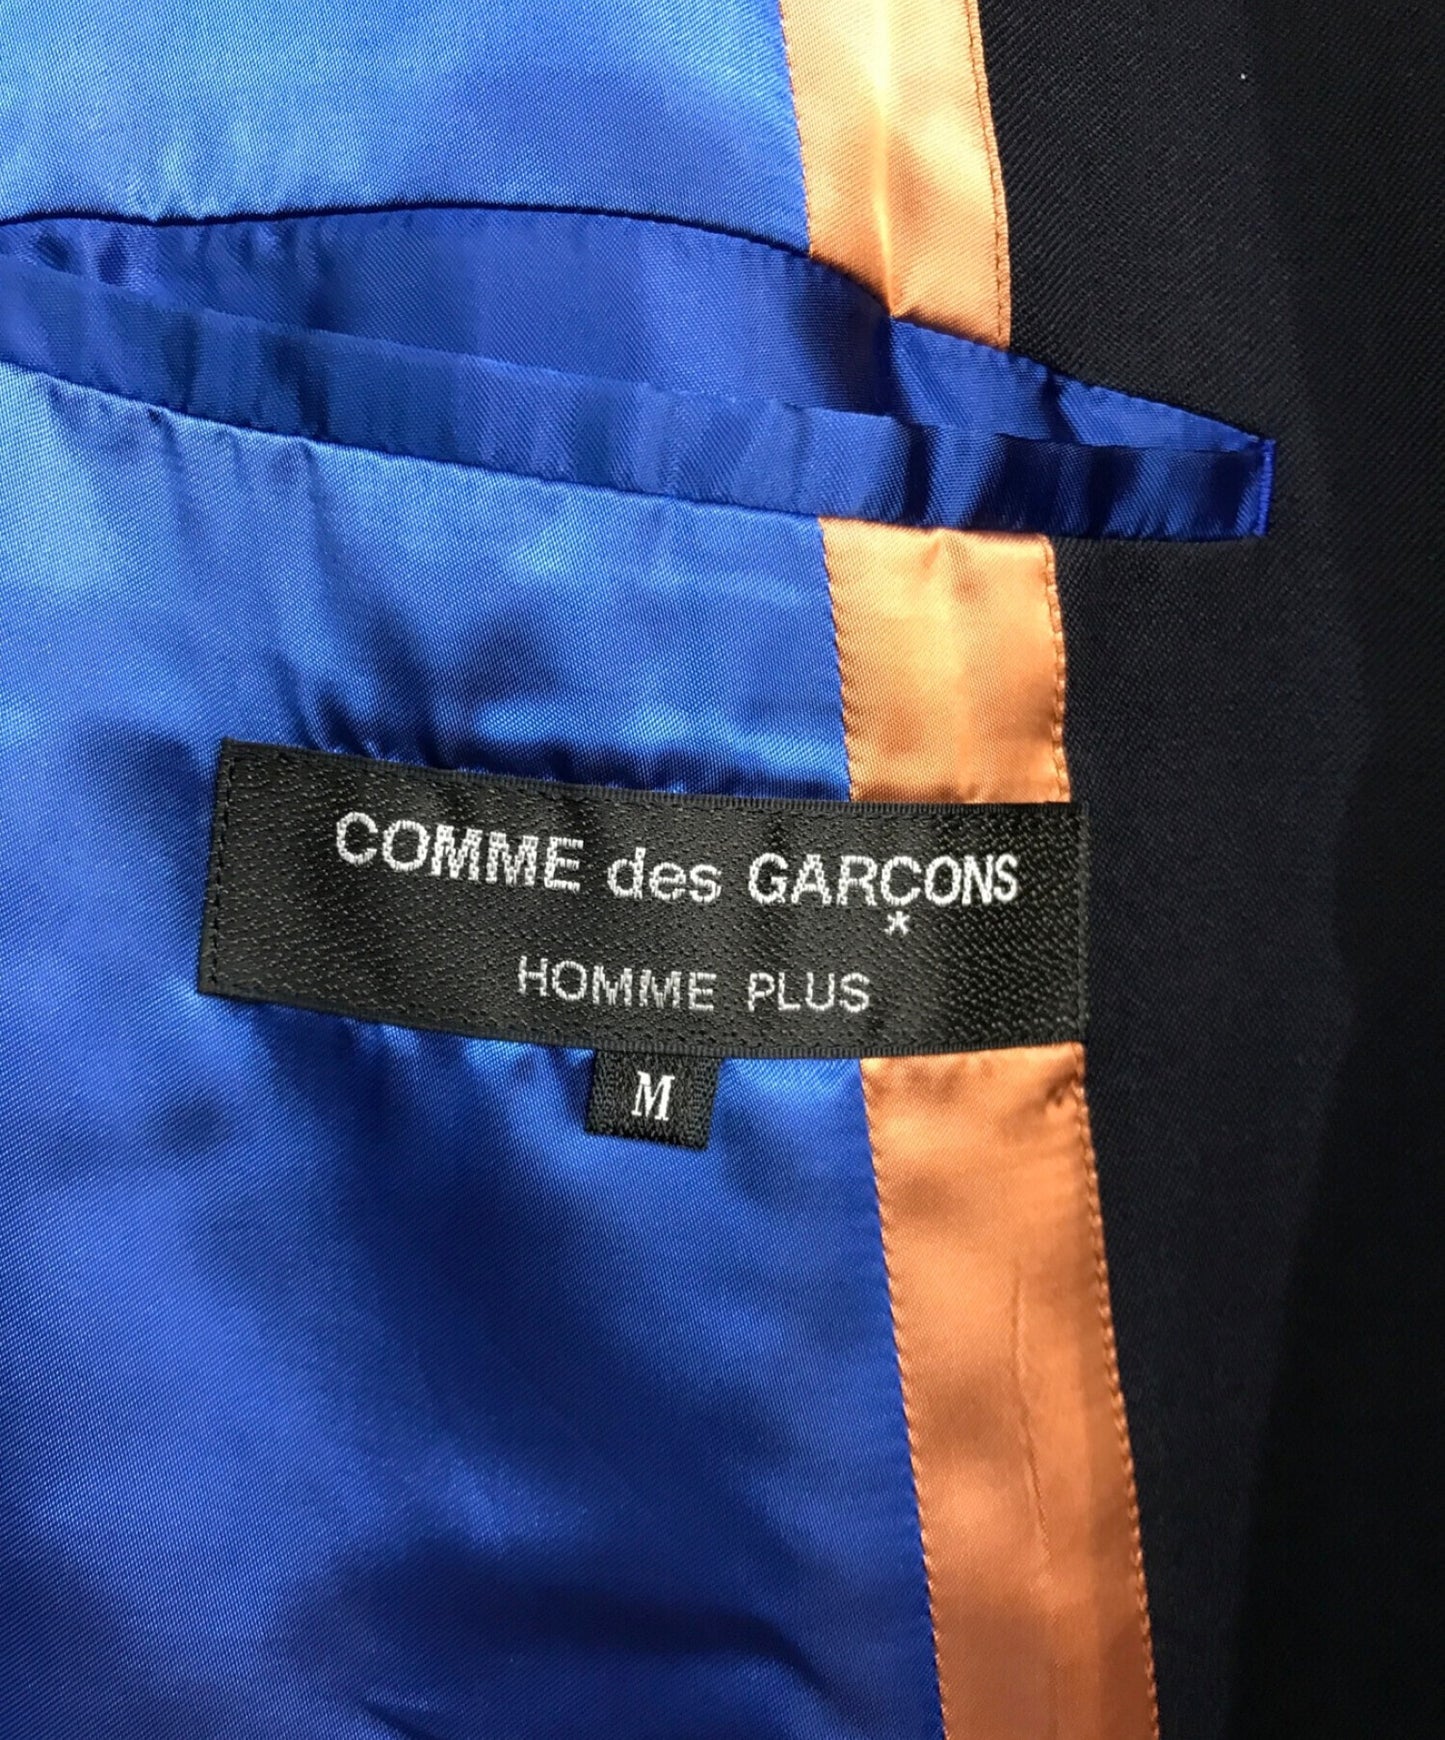 Comme des Garcons Homme Plus Gobelins 기간 AD1999 00SS 진화 색상 안감 스위치 울 롱 코트 PJ-10005M PJ-10005M